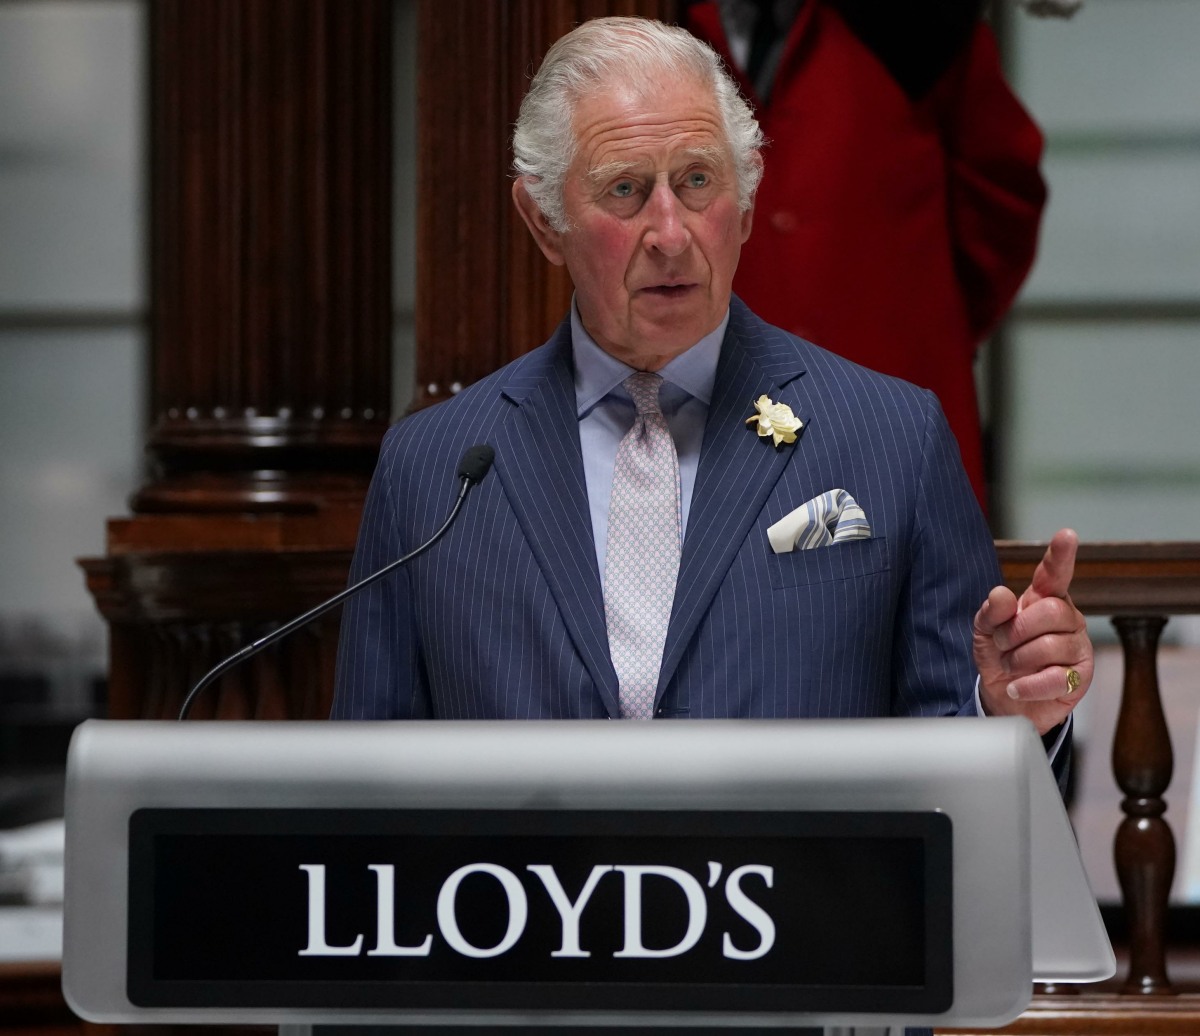 Charles visits Lloyd's of London